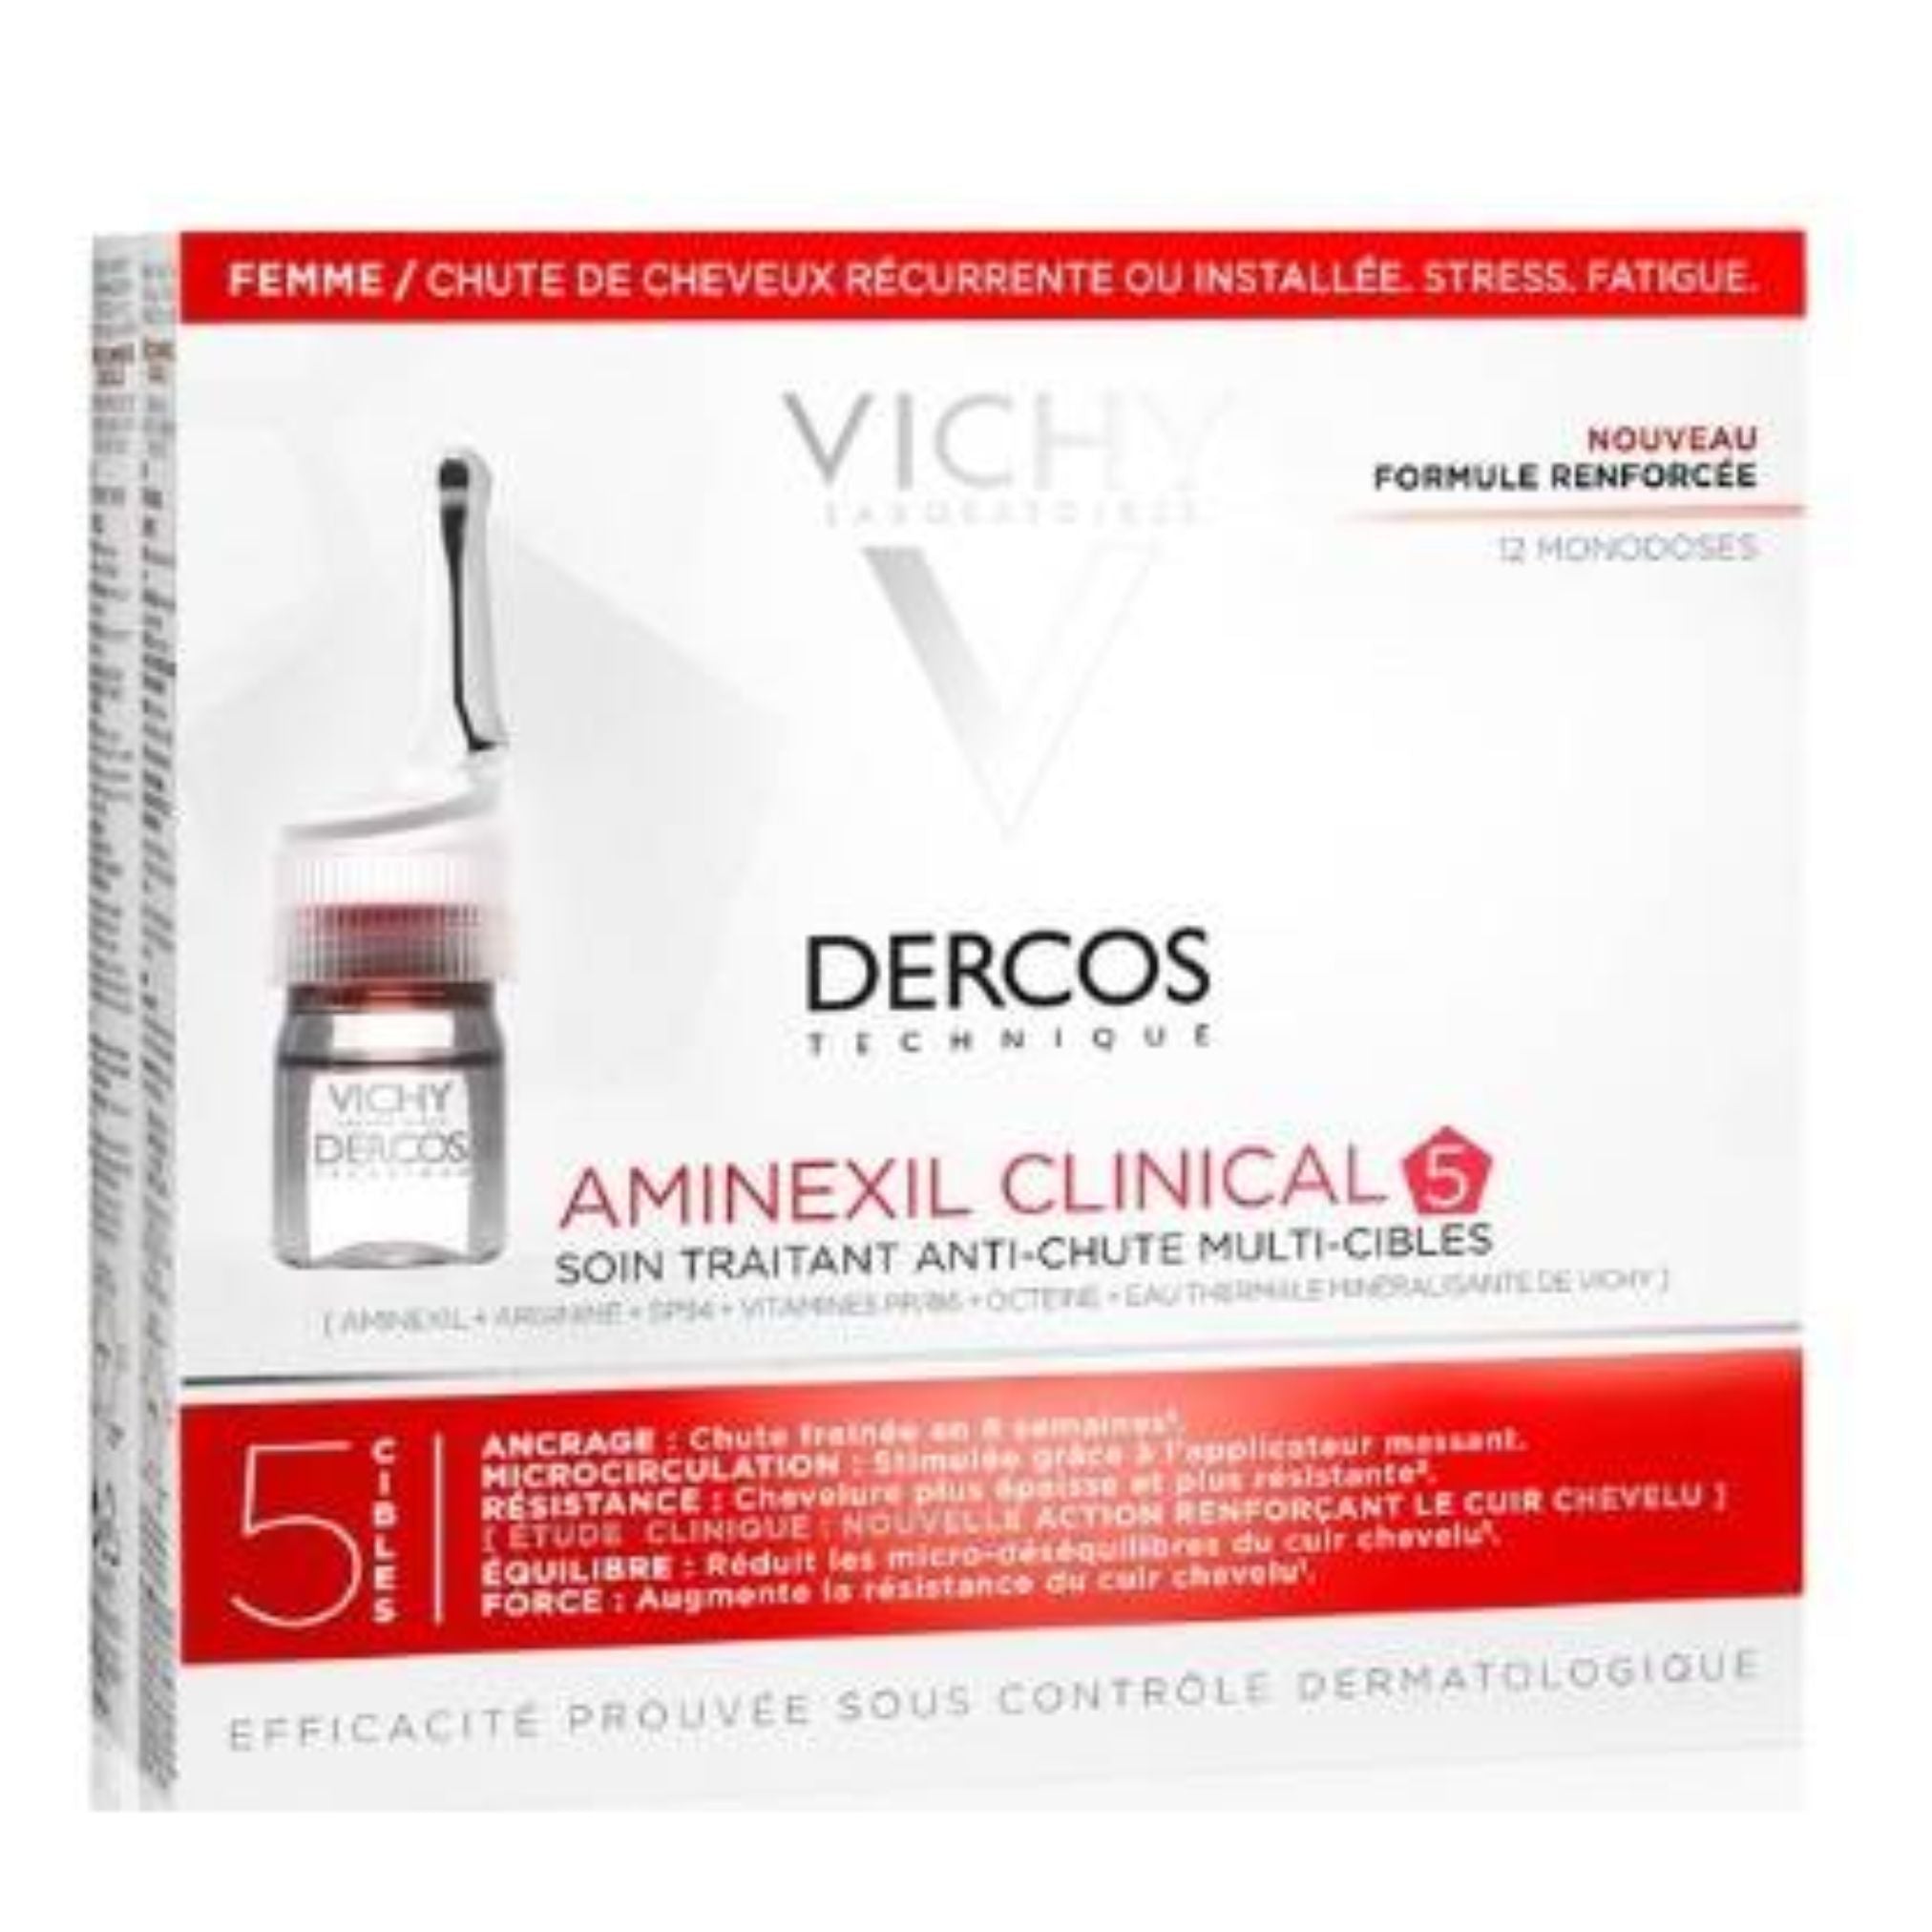 Vichy Dercos Technique Aminexil Clinical 5 Ampolas Mulher x12